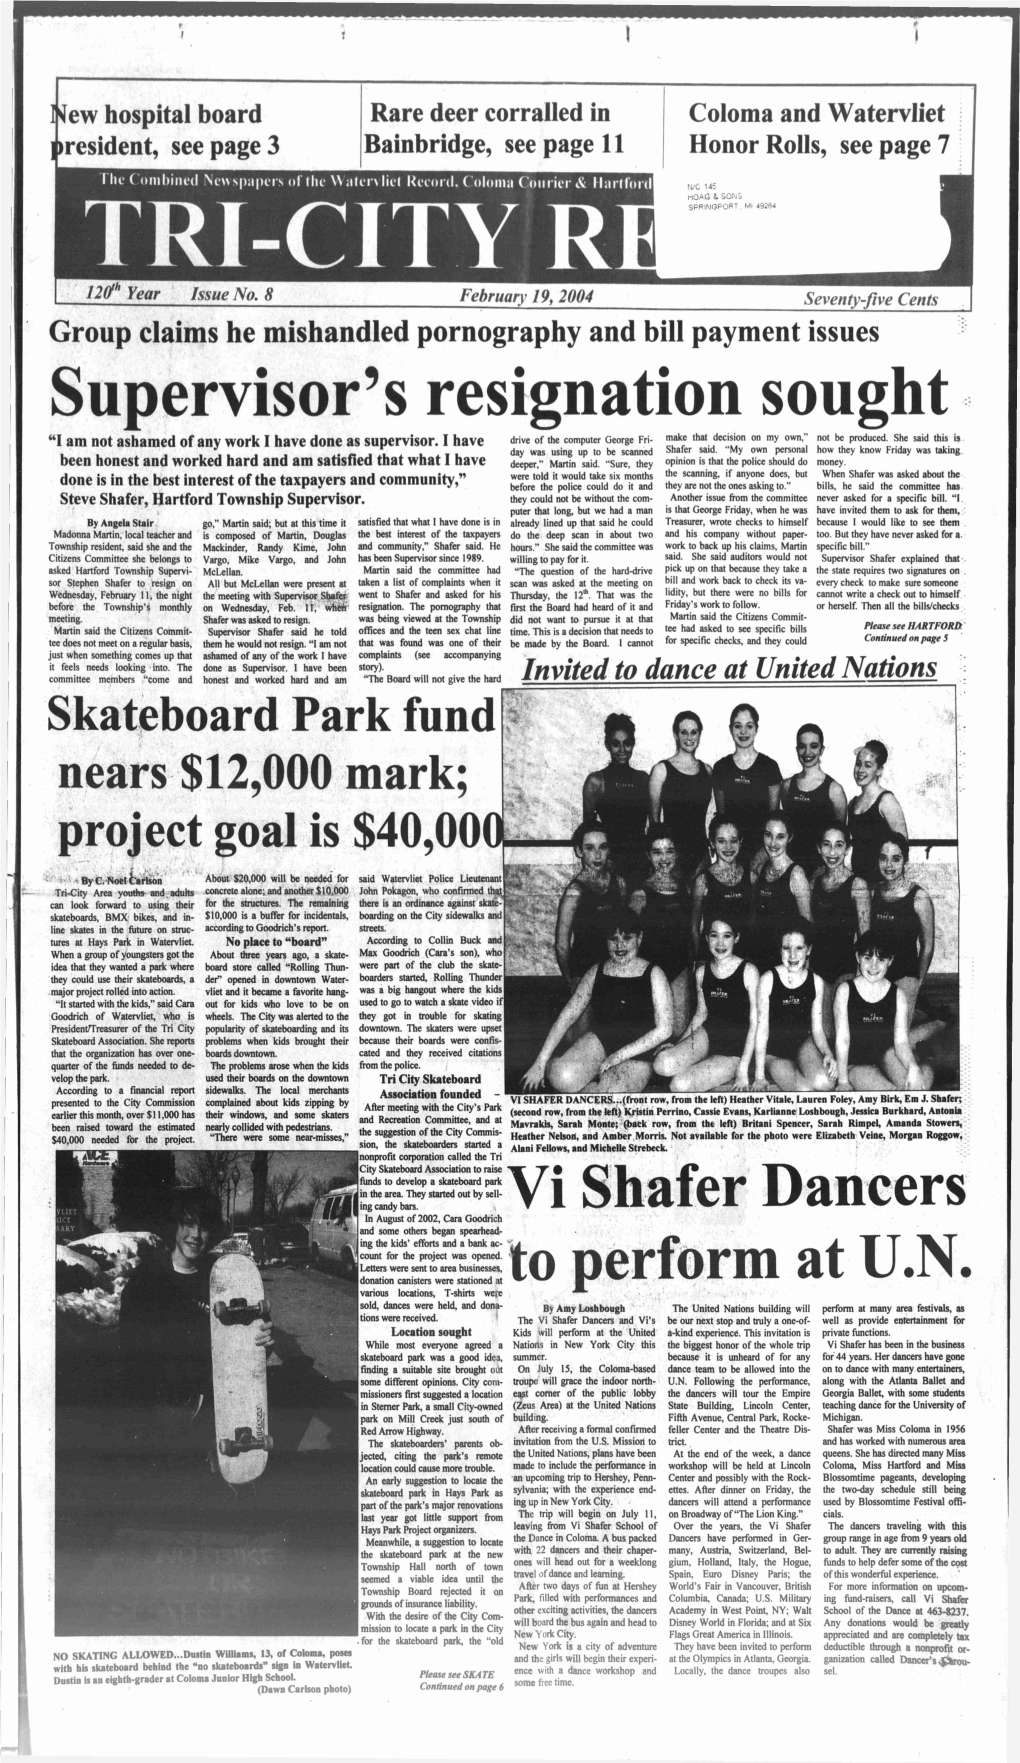 Skateboard Park Fund Nears $12,000 Mark; Project Goal Is $40,00